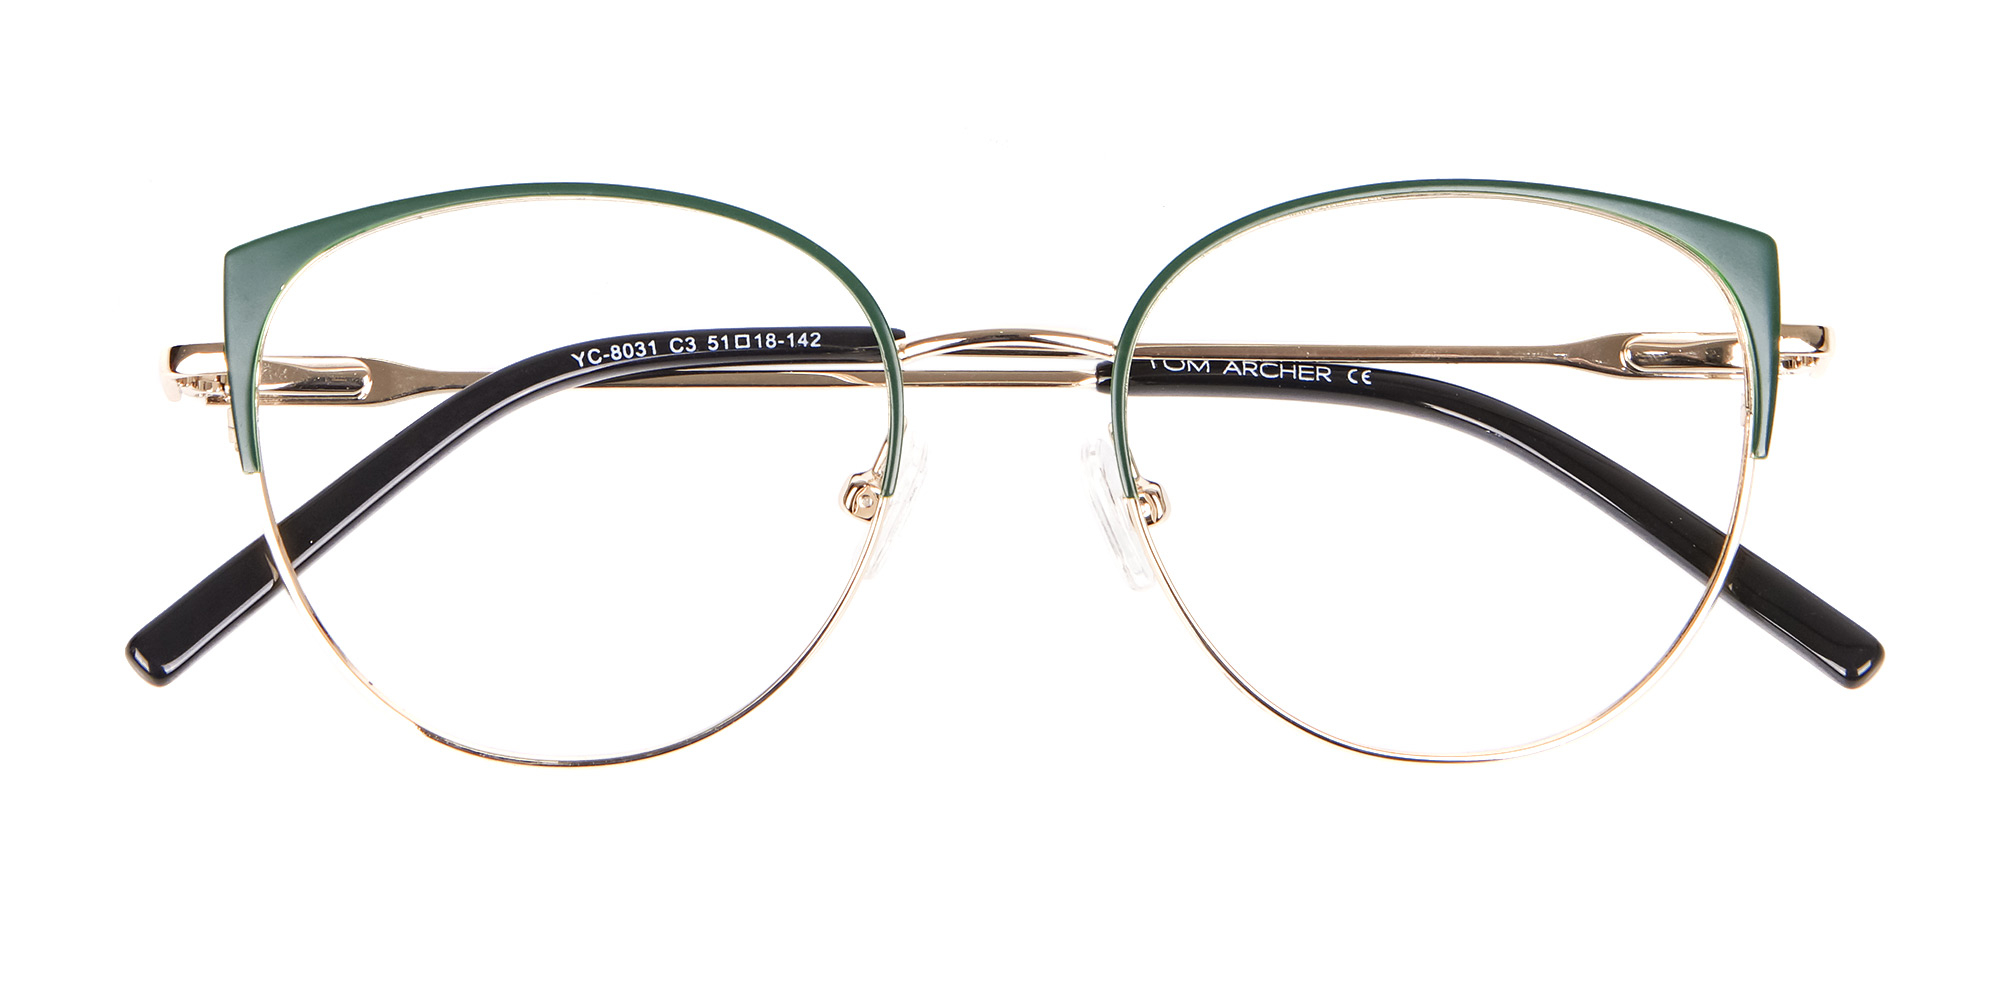 Vintage Inspired Glasses Green and Metal Frame - 1